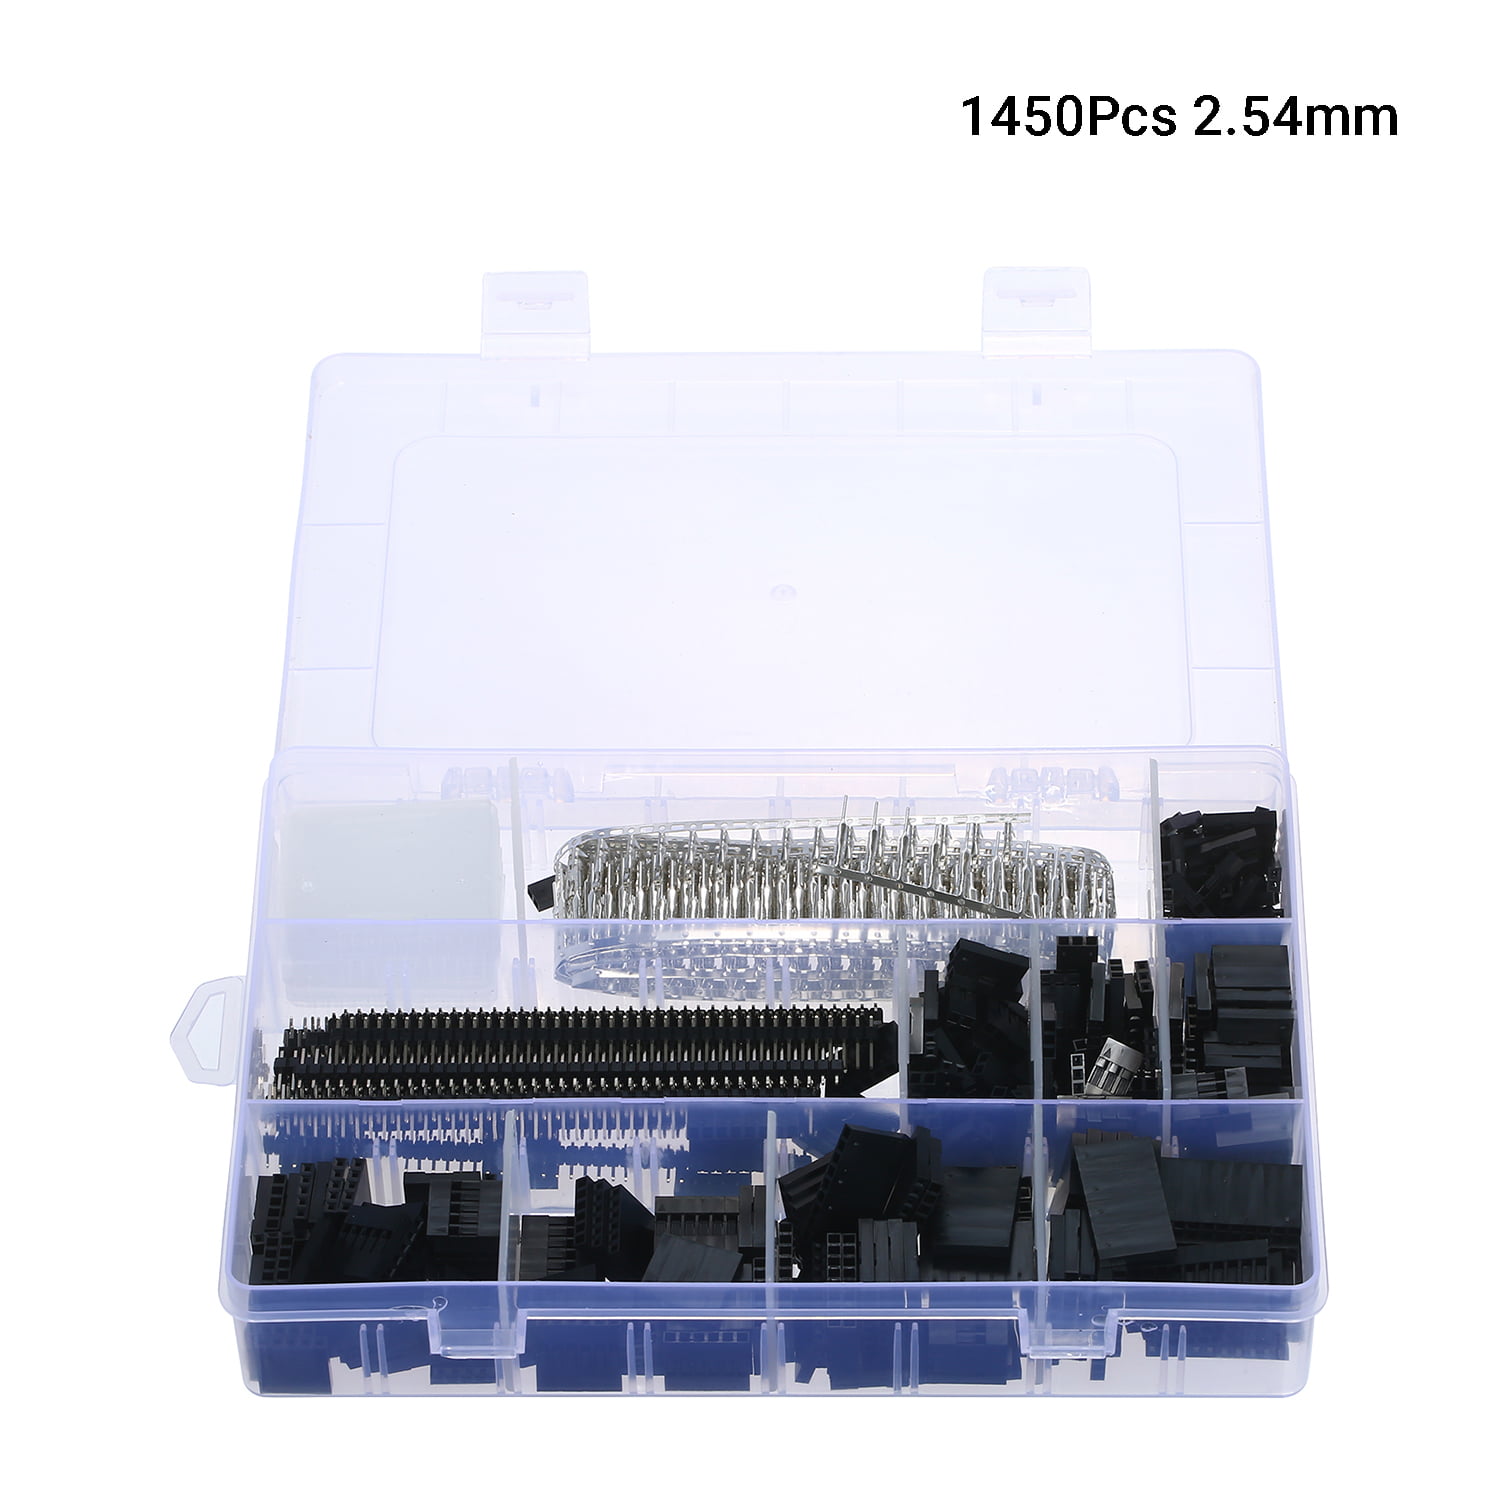 1450PCS 2.54mm Jumper Cable PCB Crimp Pin Header Connector Housing Kit BU 